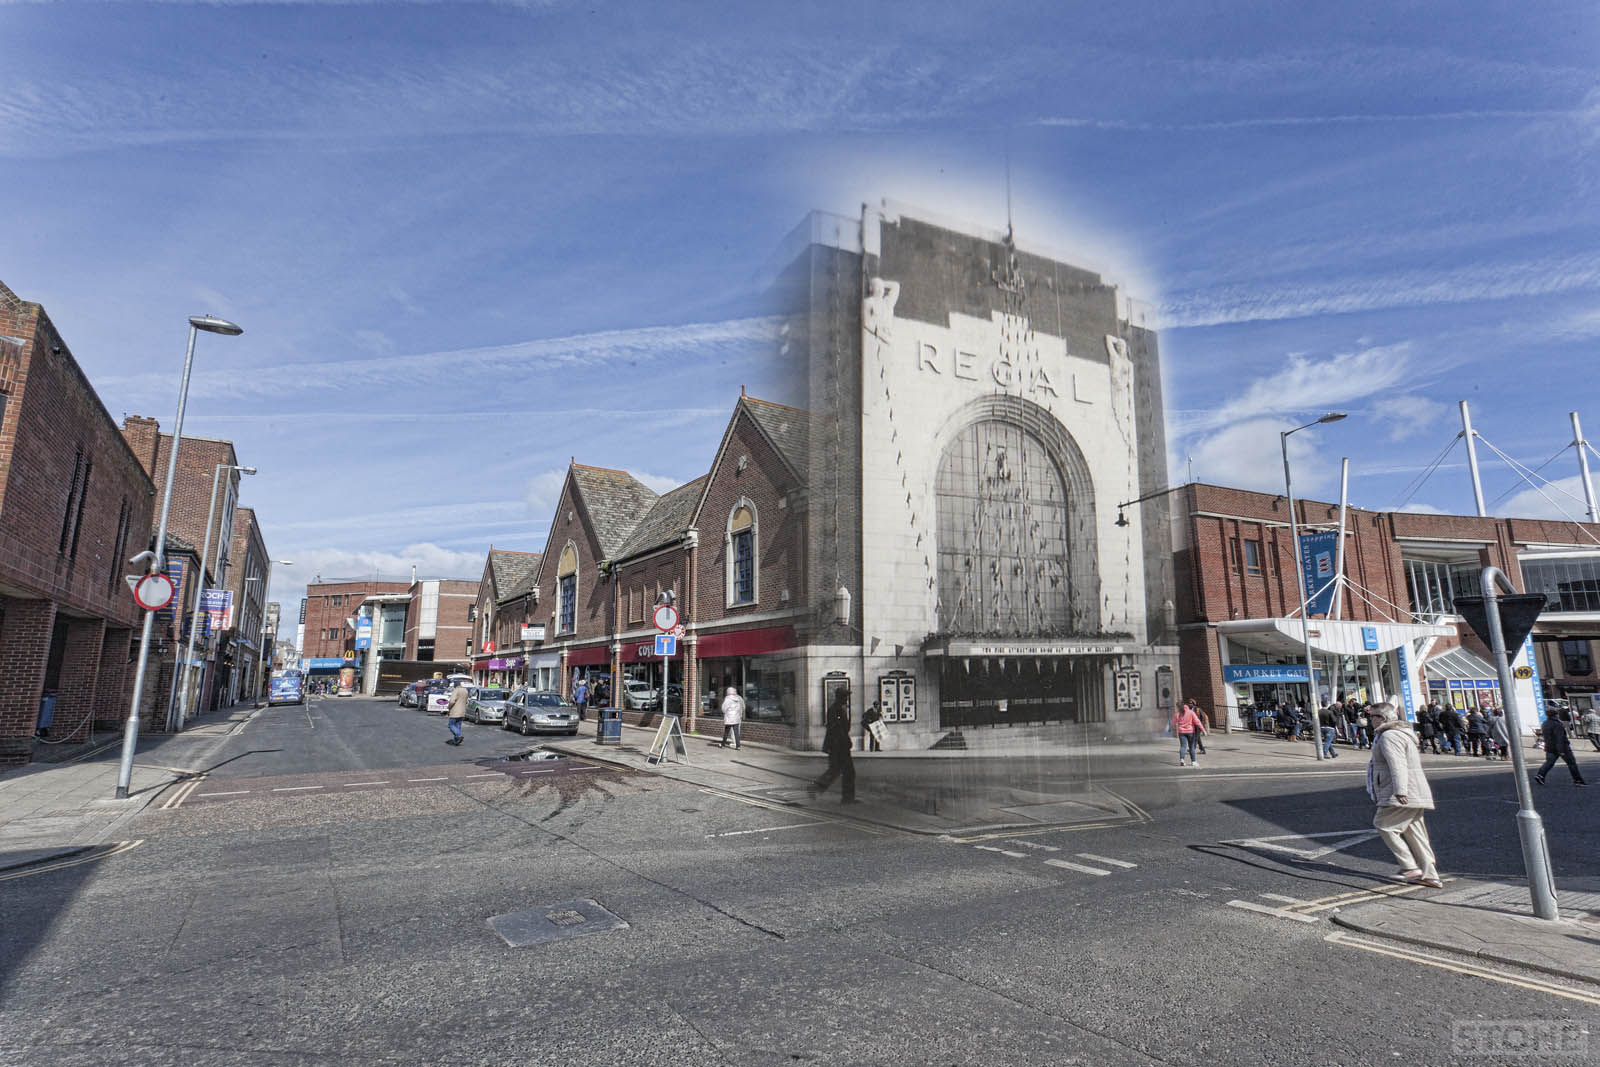 Cinema ghosts: Great Yarmouth Cinemas Regal & Theatre